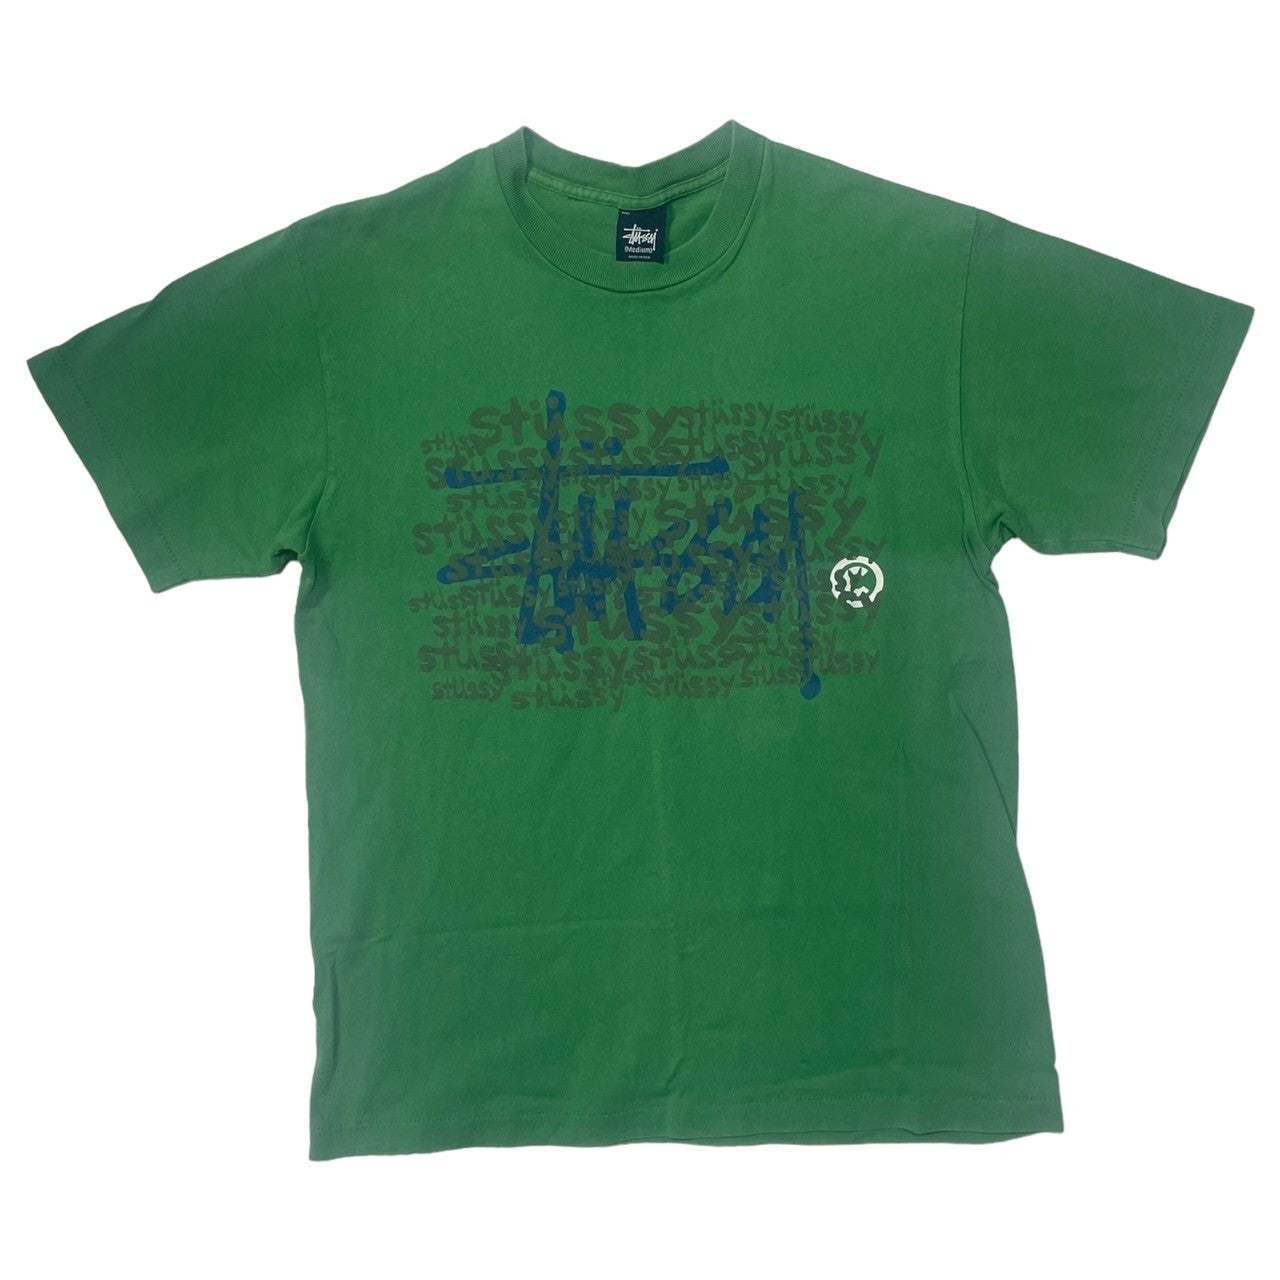 STUSSY(ステューシー) 90's~00's VINTAGE Tシャツ with lots of logos ロゴ 紺タグ SIZE M グリーン  90～00年代 OLD STUSSY